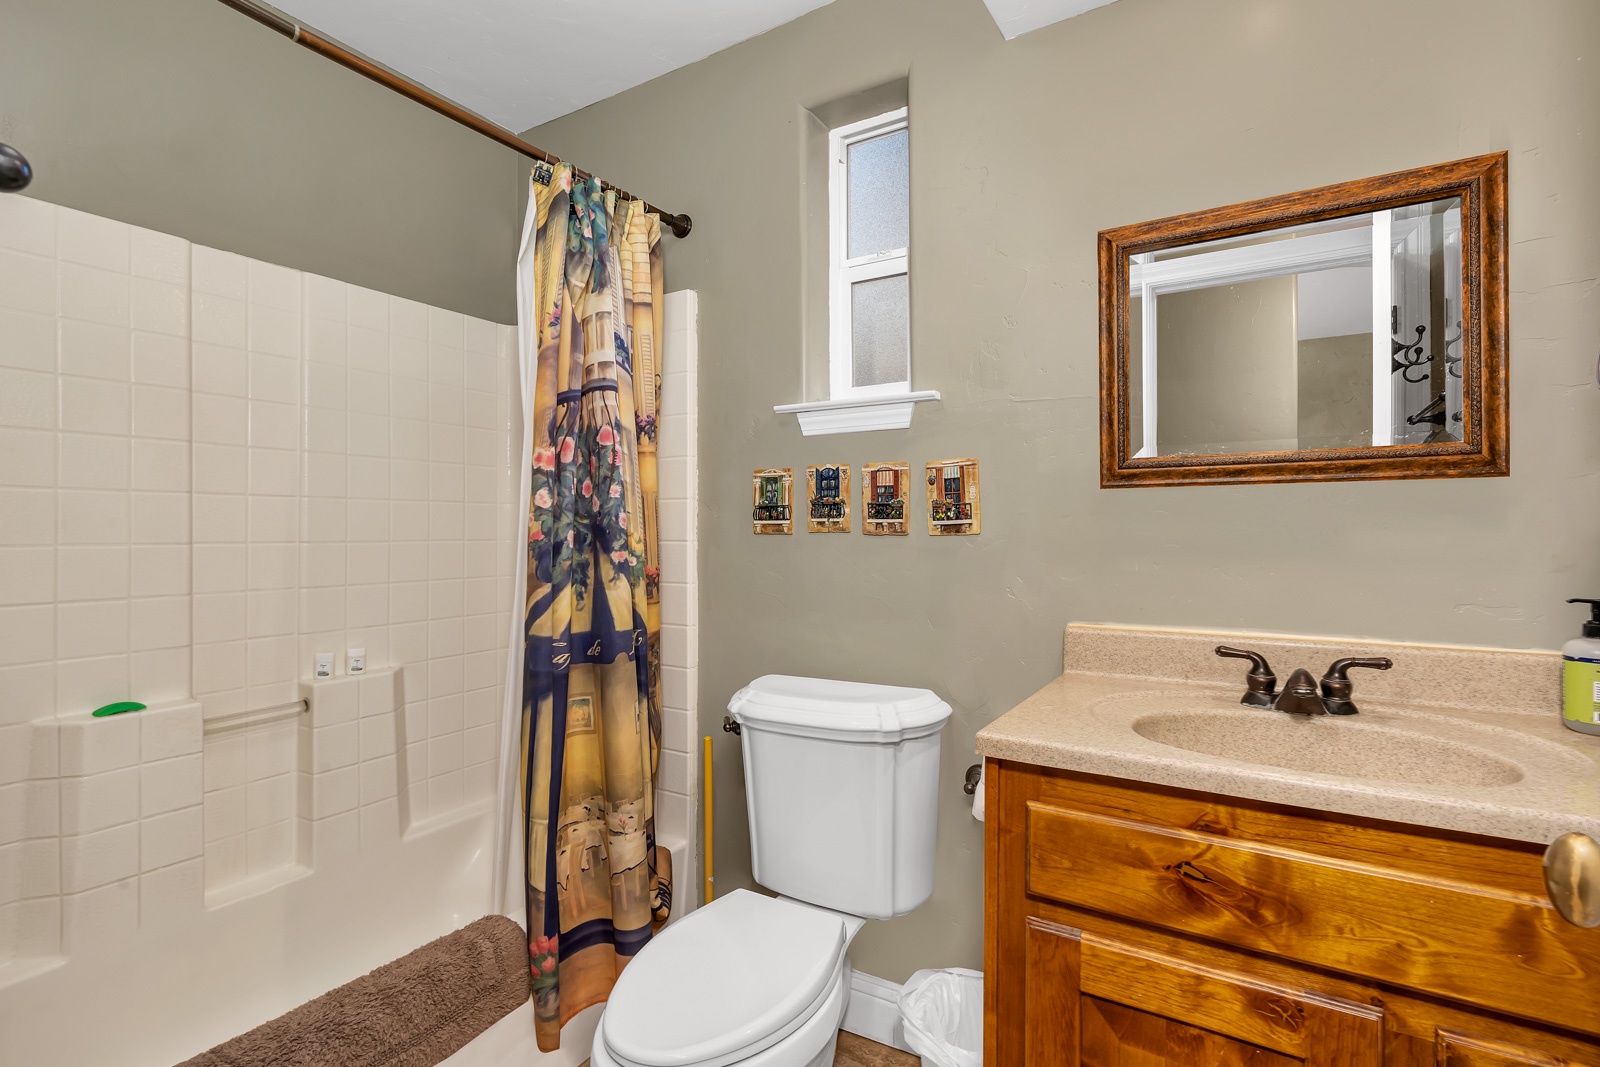 The 1st floor full bath offers a single vanity & shower/tub combo